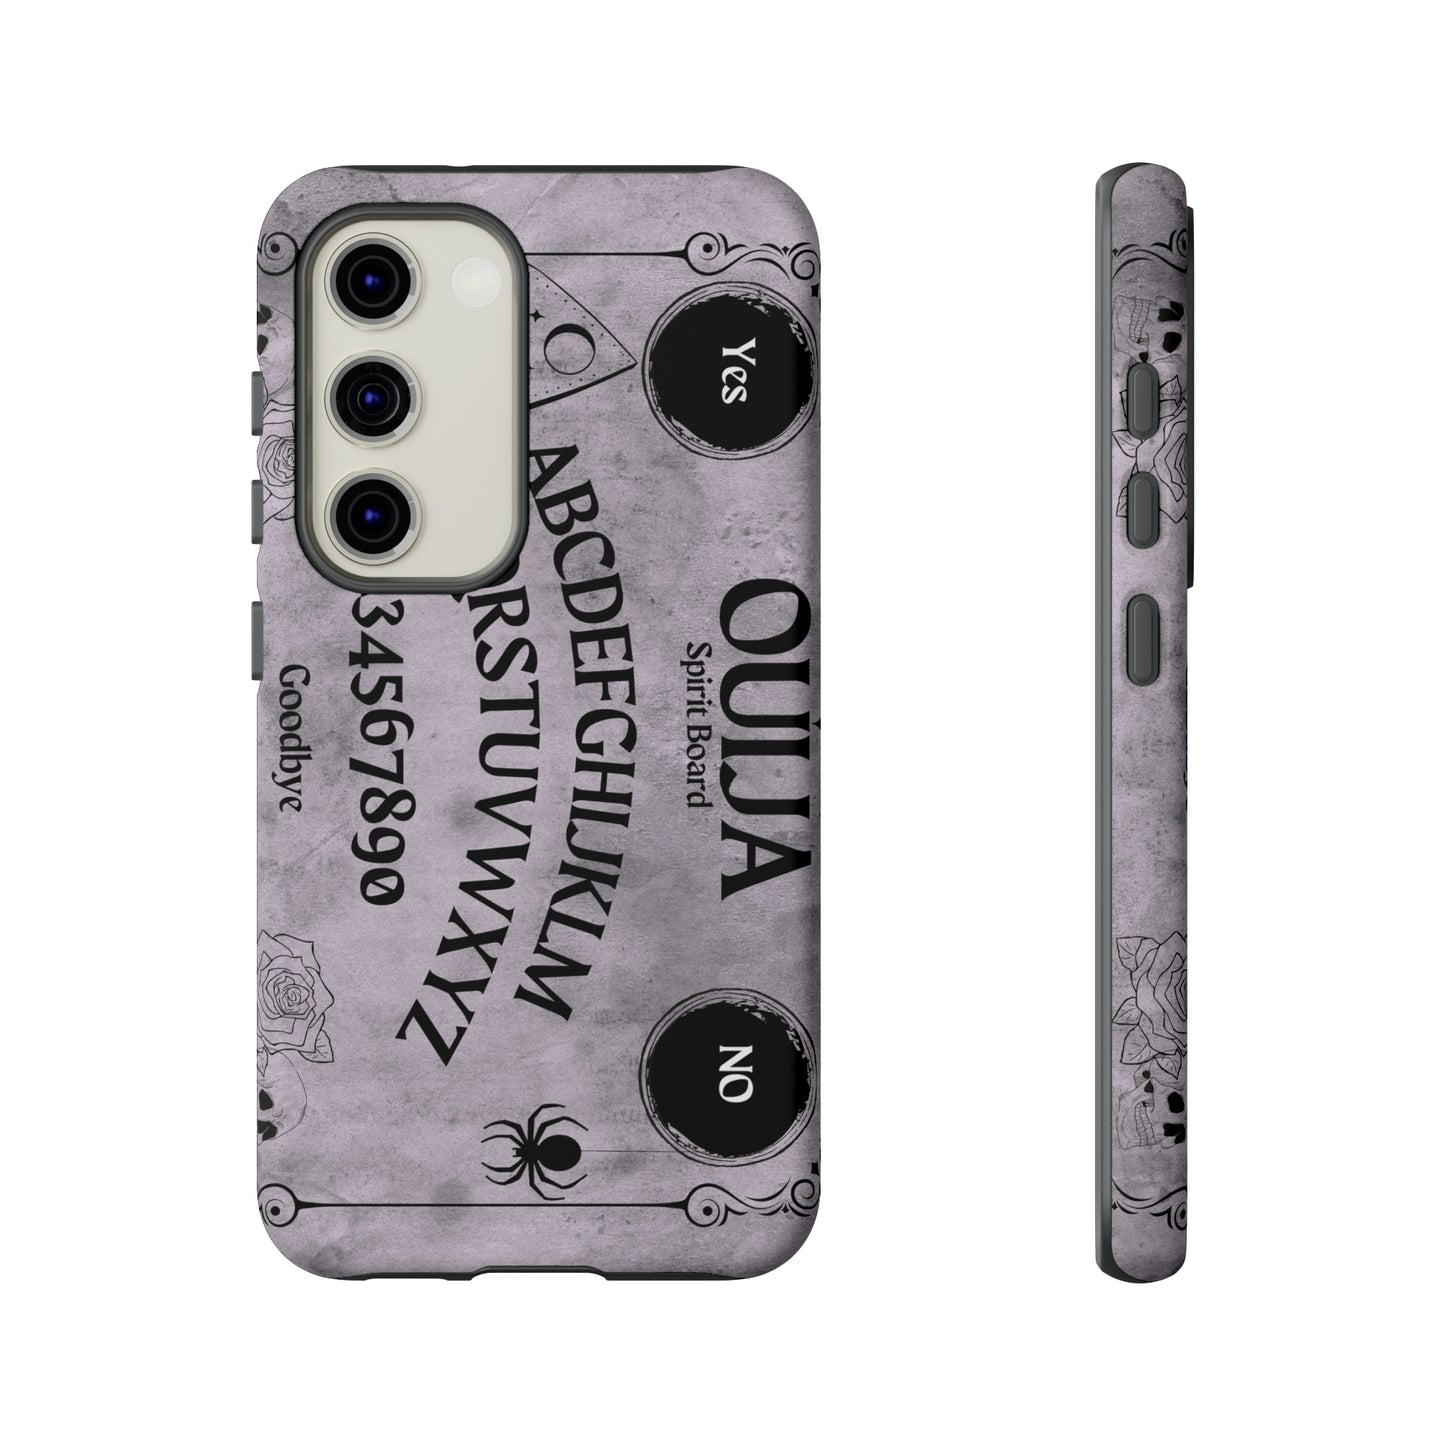 Ouija Board Tough Phone Cases For Samsung iPhone GooglePhone CaseVTZdesignsSamsung Galaxy S23MatteAccessoriesGlossyhalloween